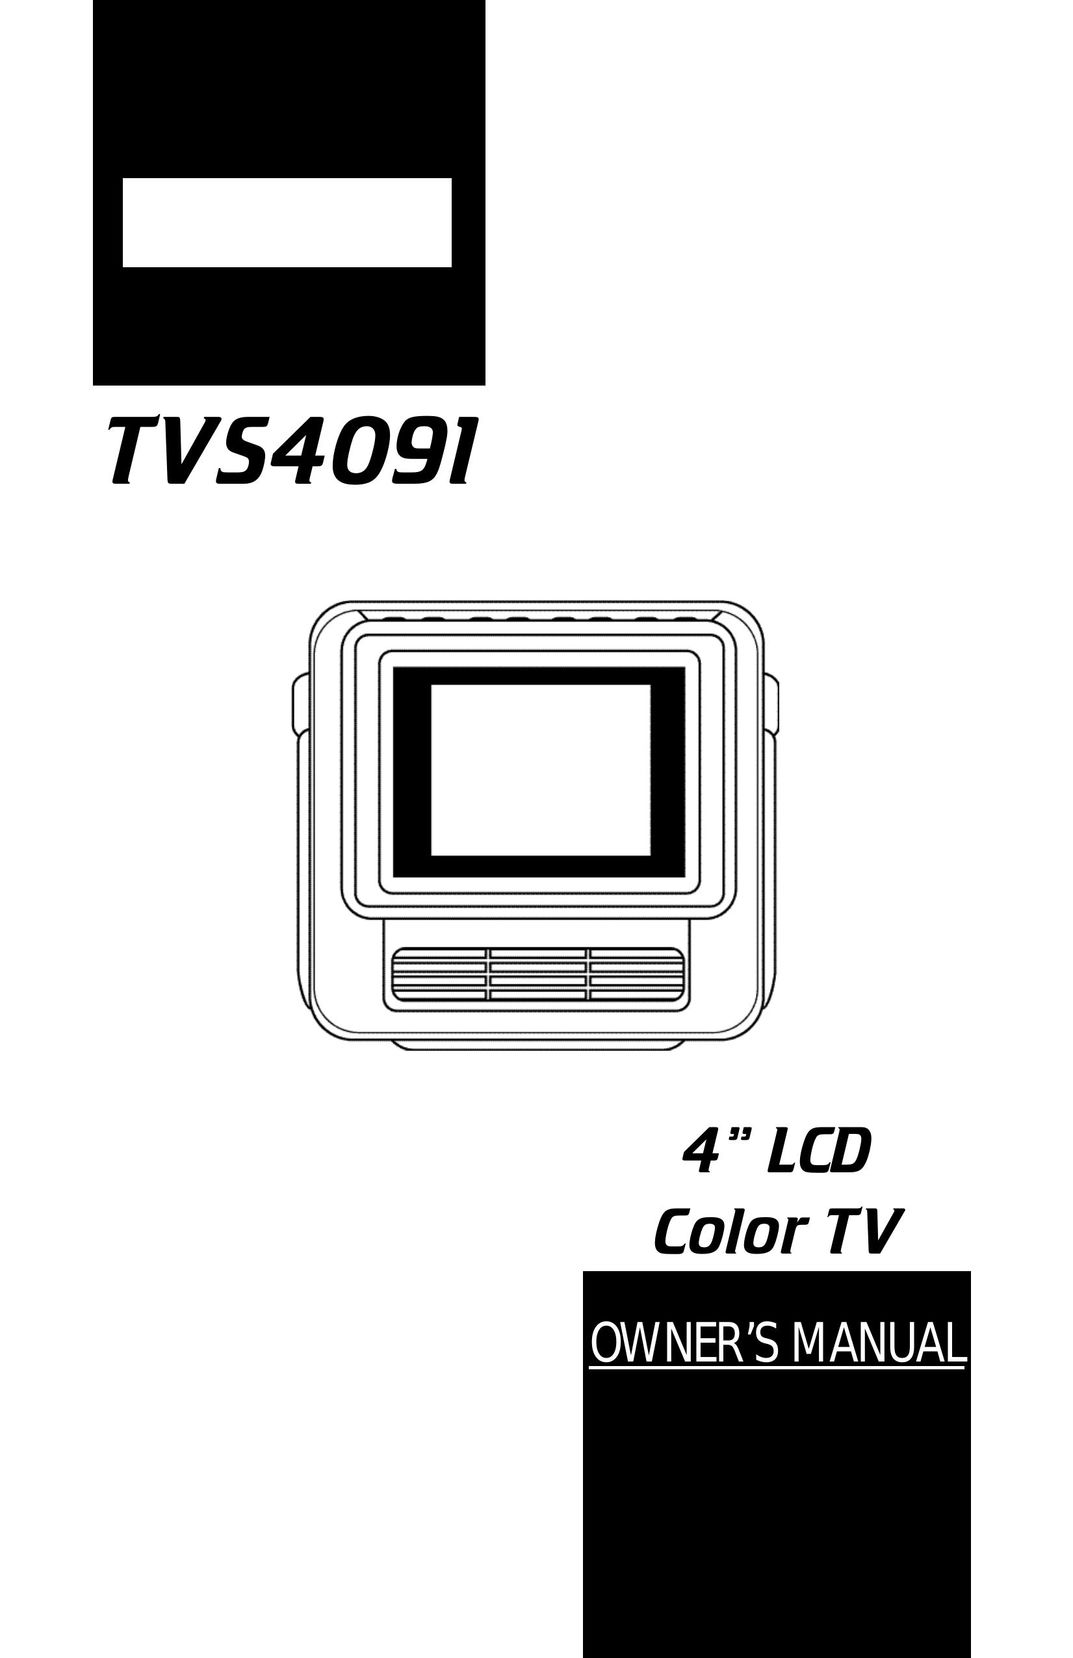 Clarion TVS4091 Portable Multimedia Player User Manual